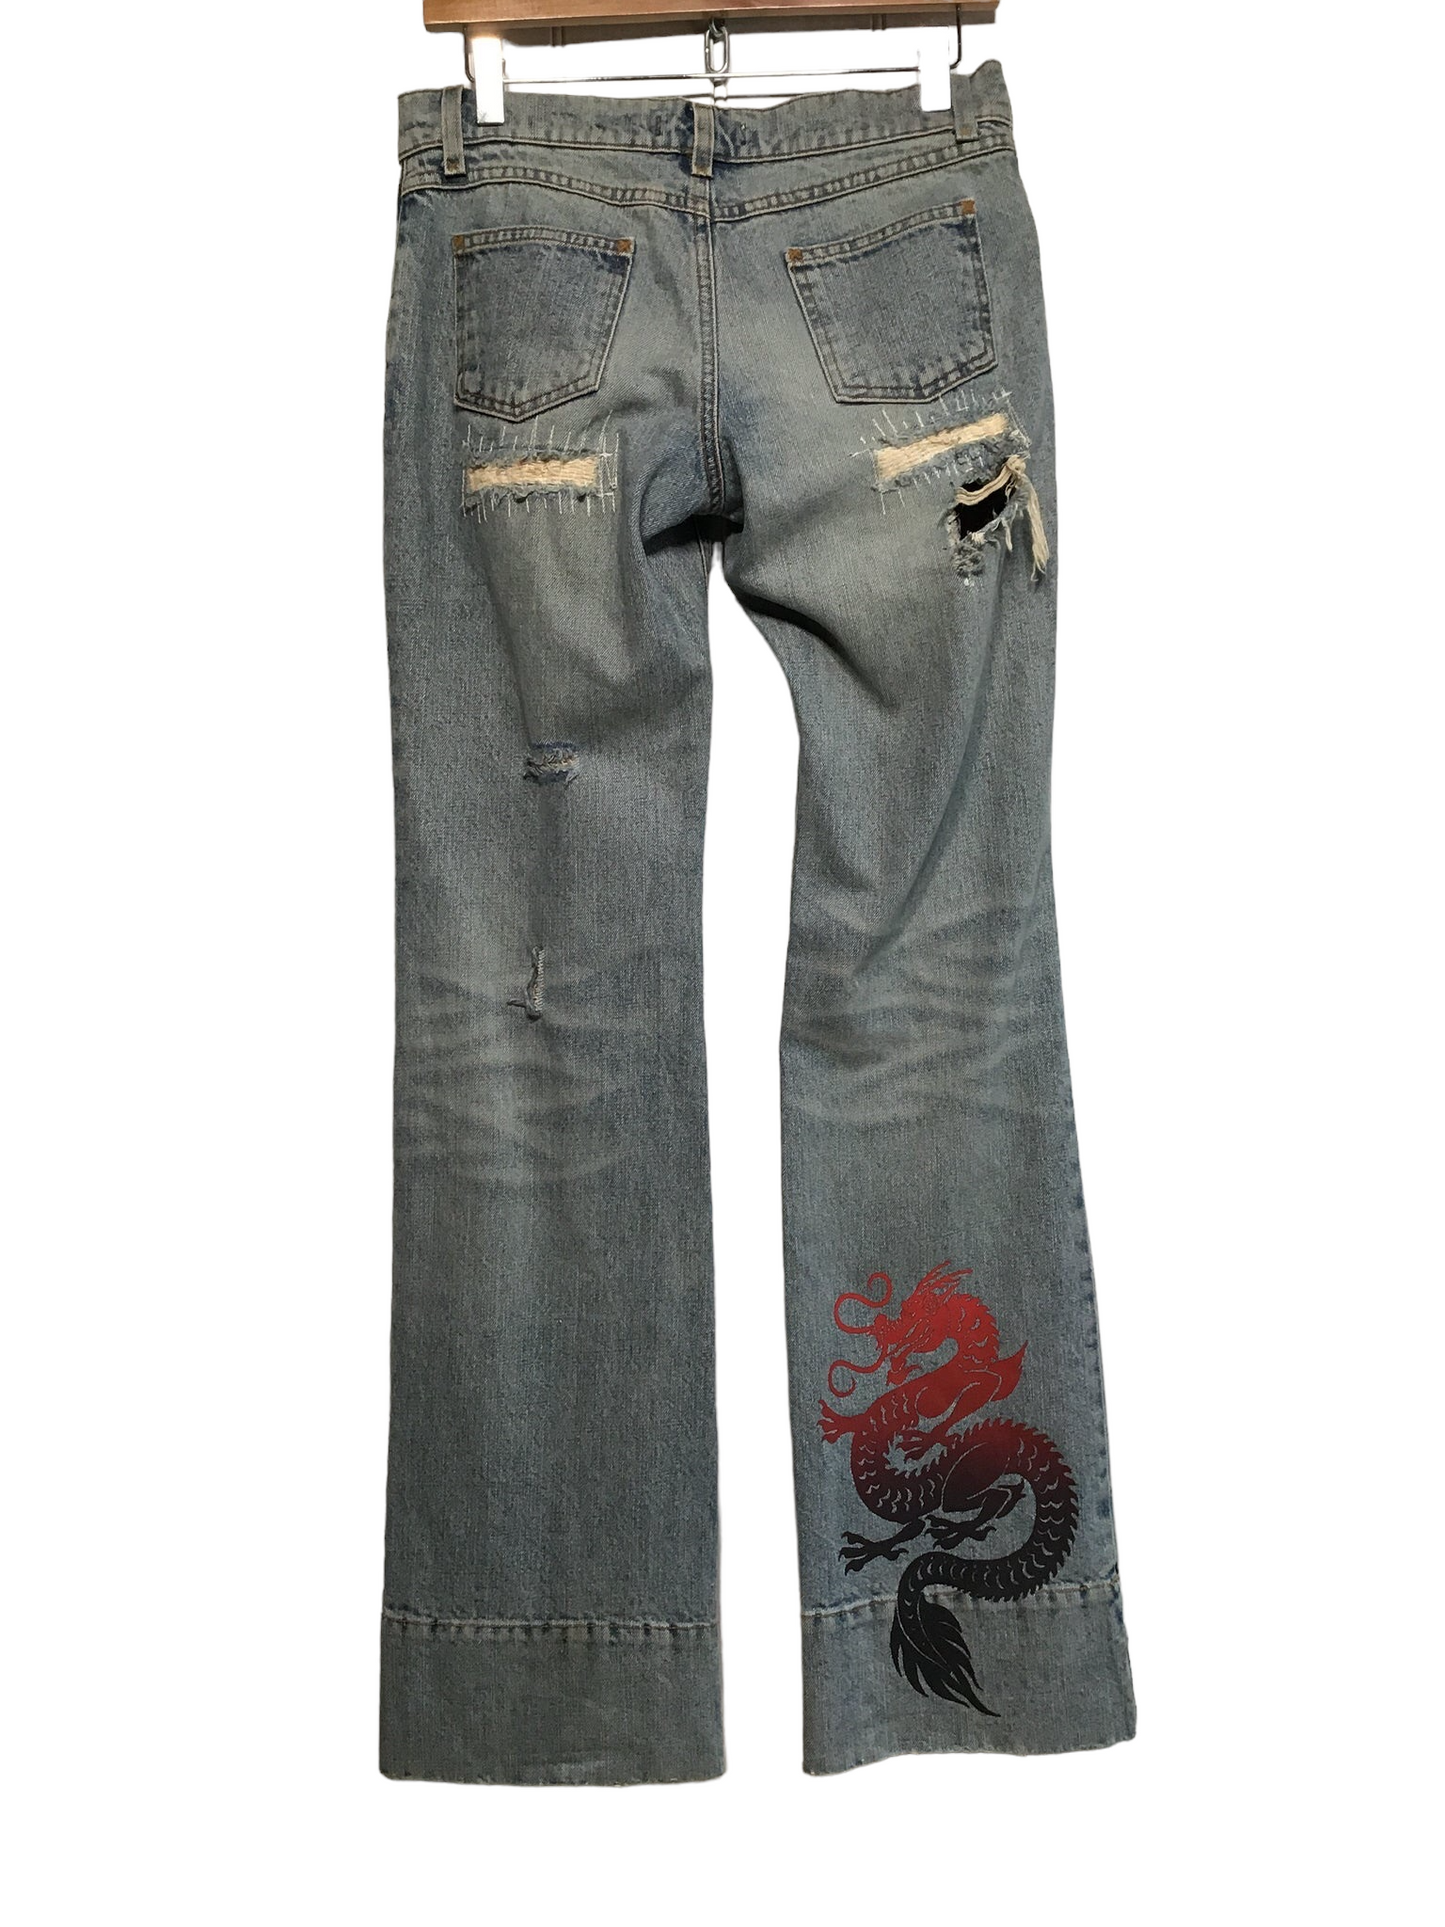 Dolce & Gabbana Distressed Jeans (Size XS)